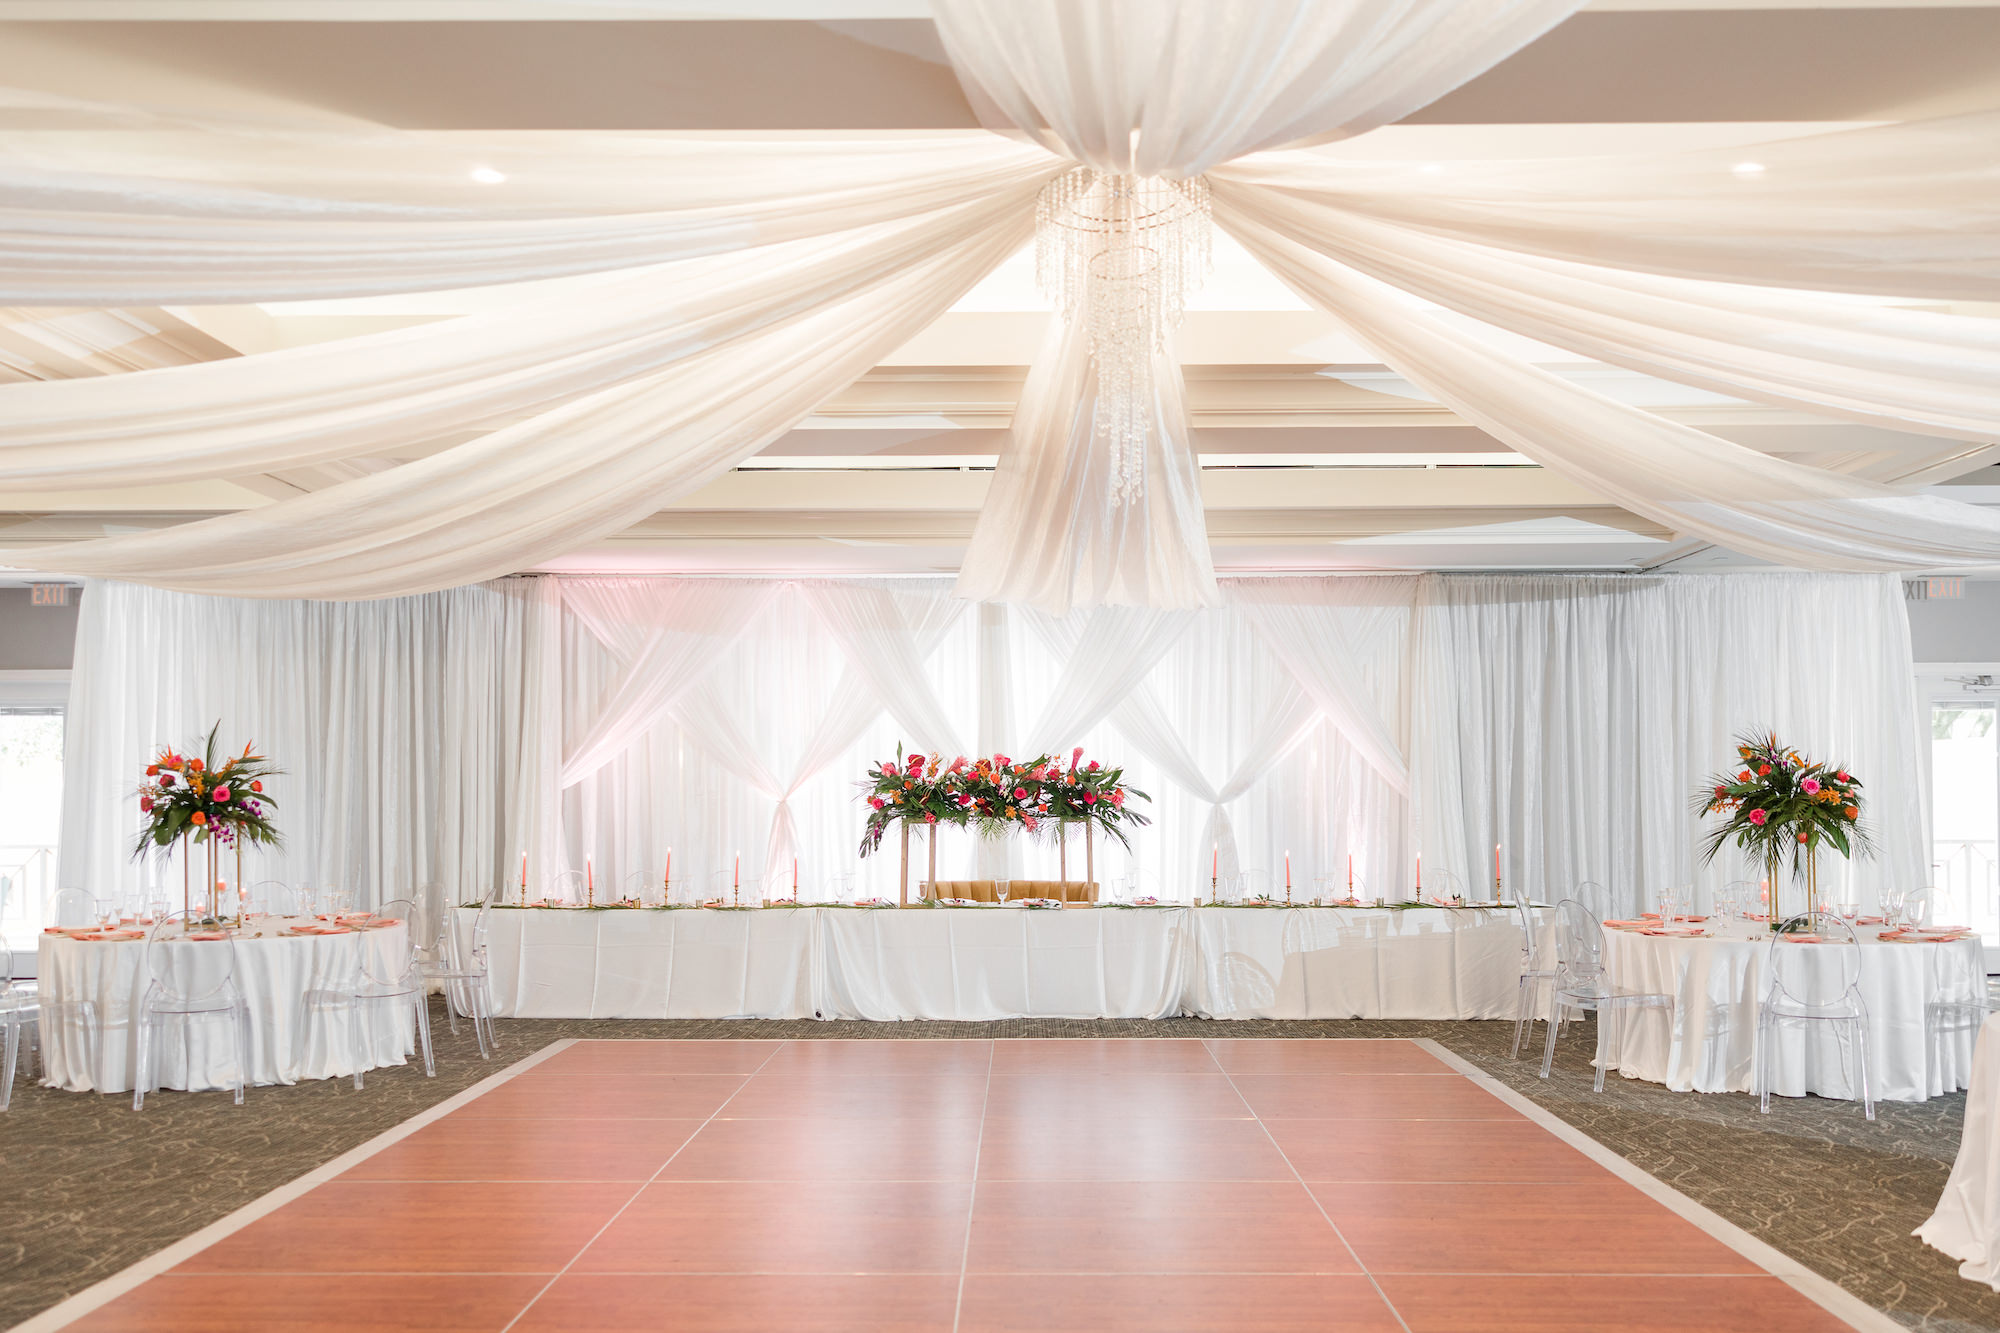 Romantic Tropical Ballroom Wedding Reception White Ceiling Drapery | Tampa Bay Wedding Venue Tampa Palms Golf & Country Club | Wedding Planner Kelci Leigh Events | Florist Save the Date Florida